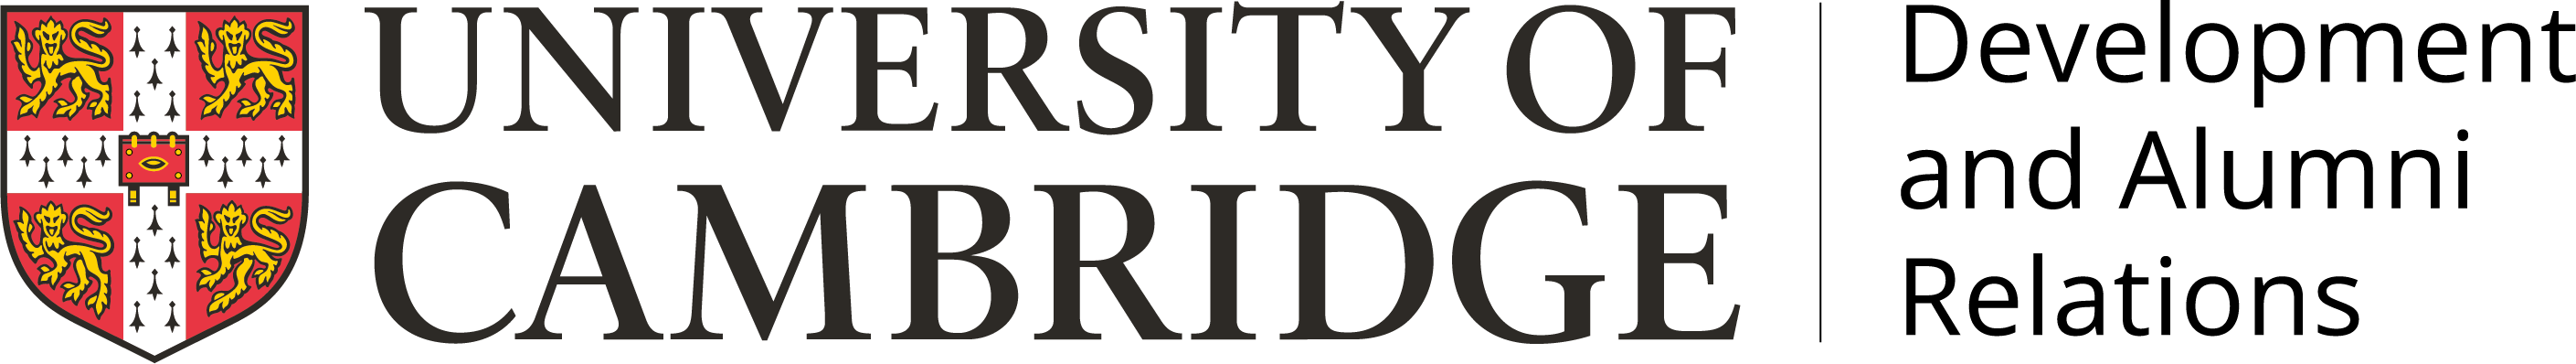 University of Cambridge Development and Alumni Relations